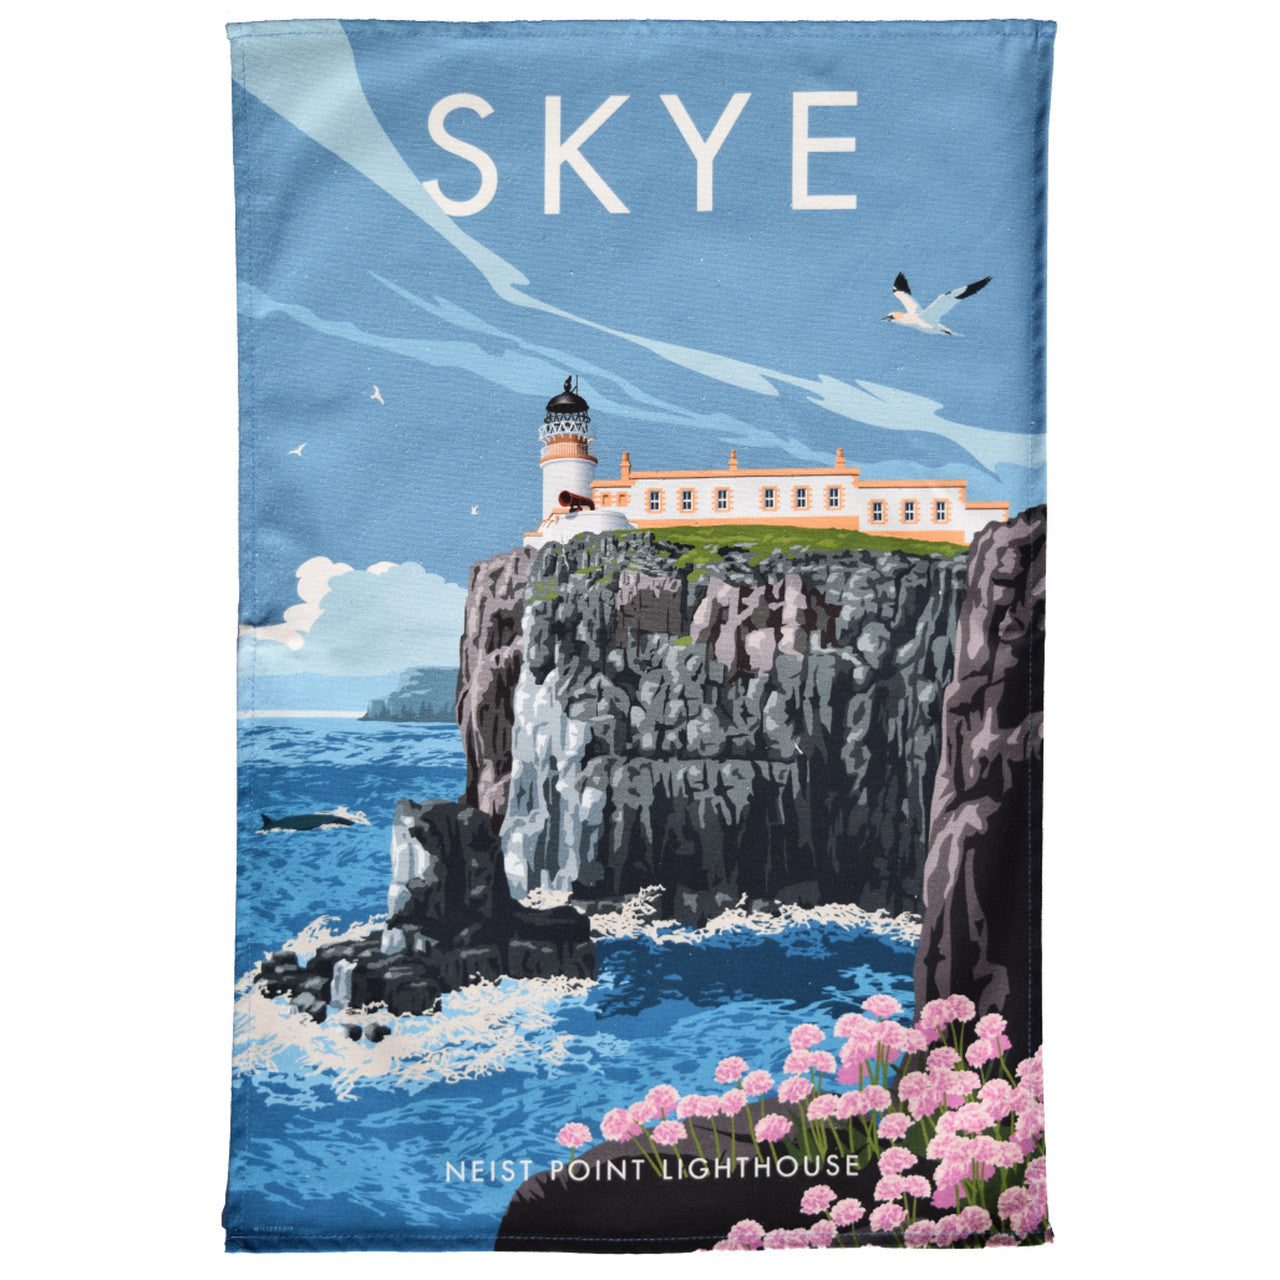 Skye - Neist Point Tea Towel by Town Towels.